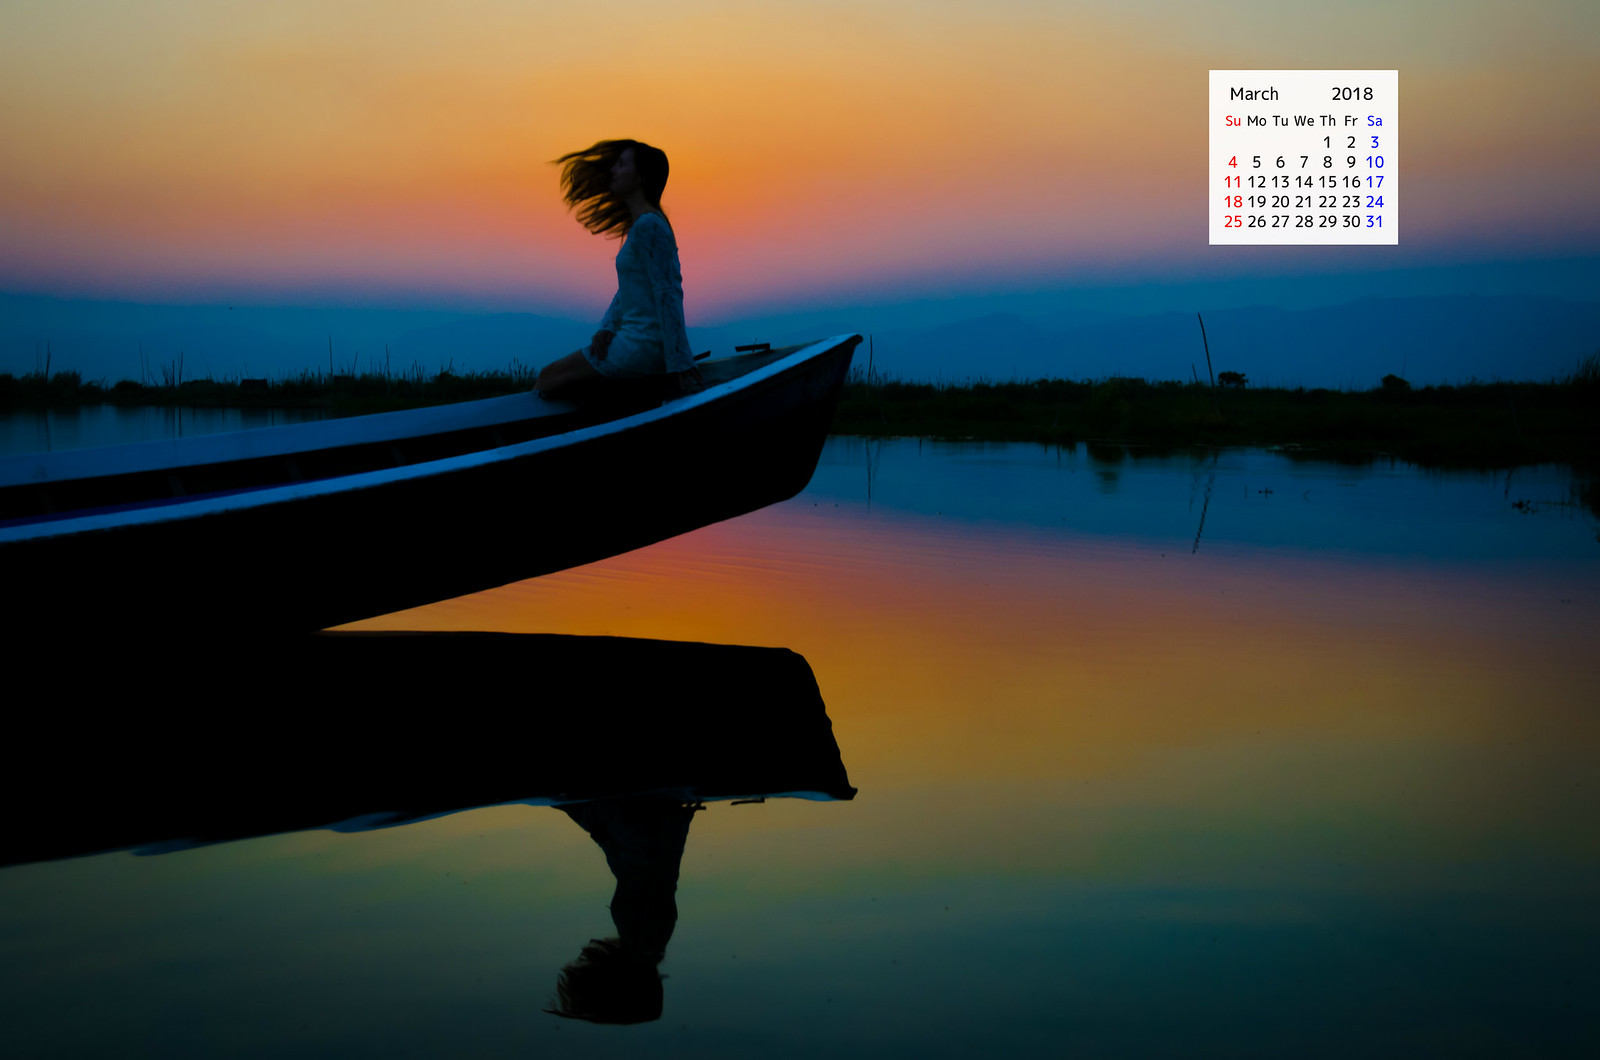 Free download March 2018 Calendar Wallpaper Women sunset boat Inle Lake Myanmar